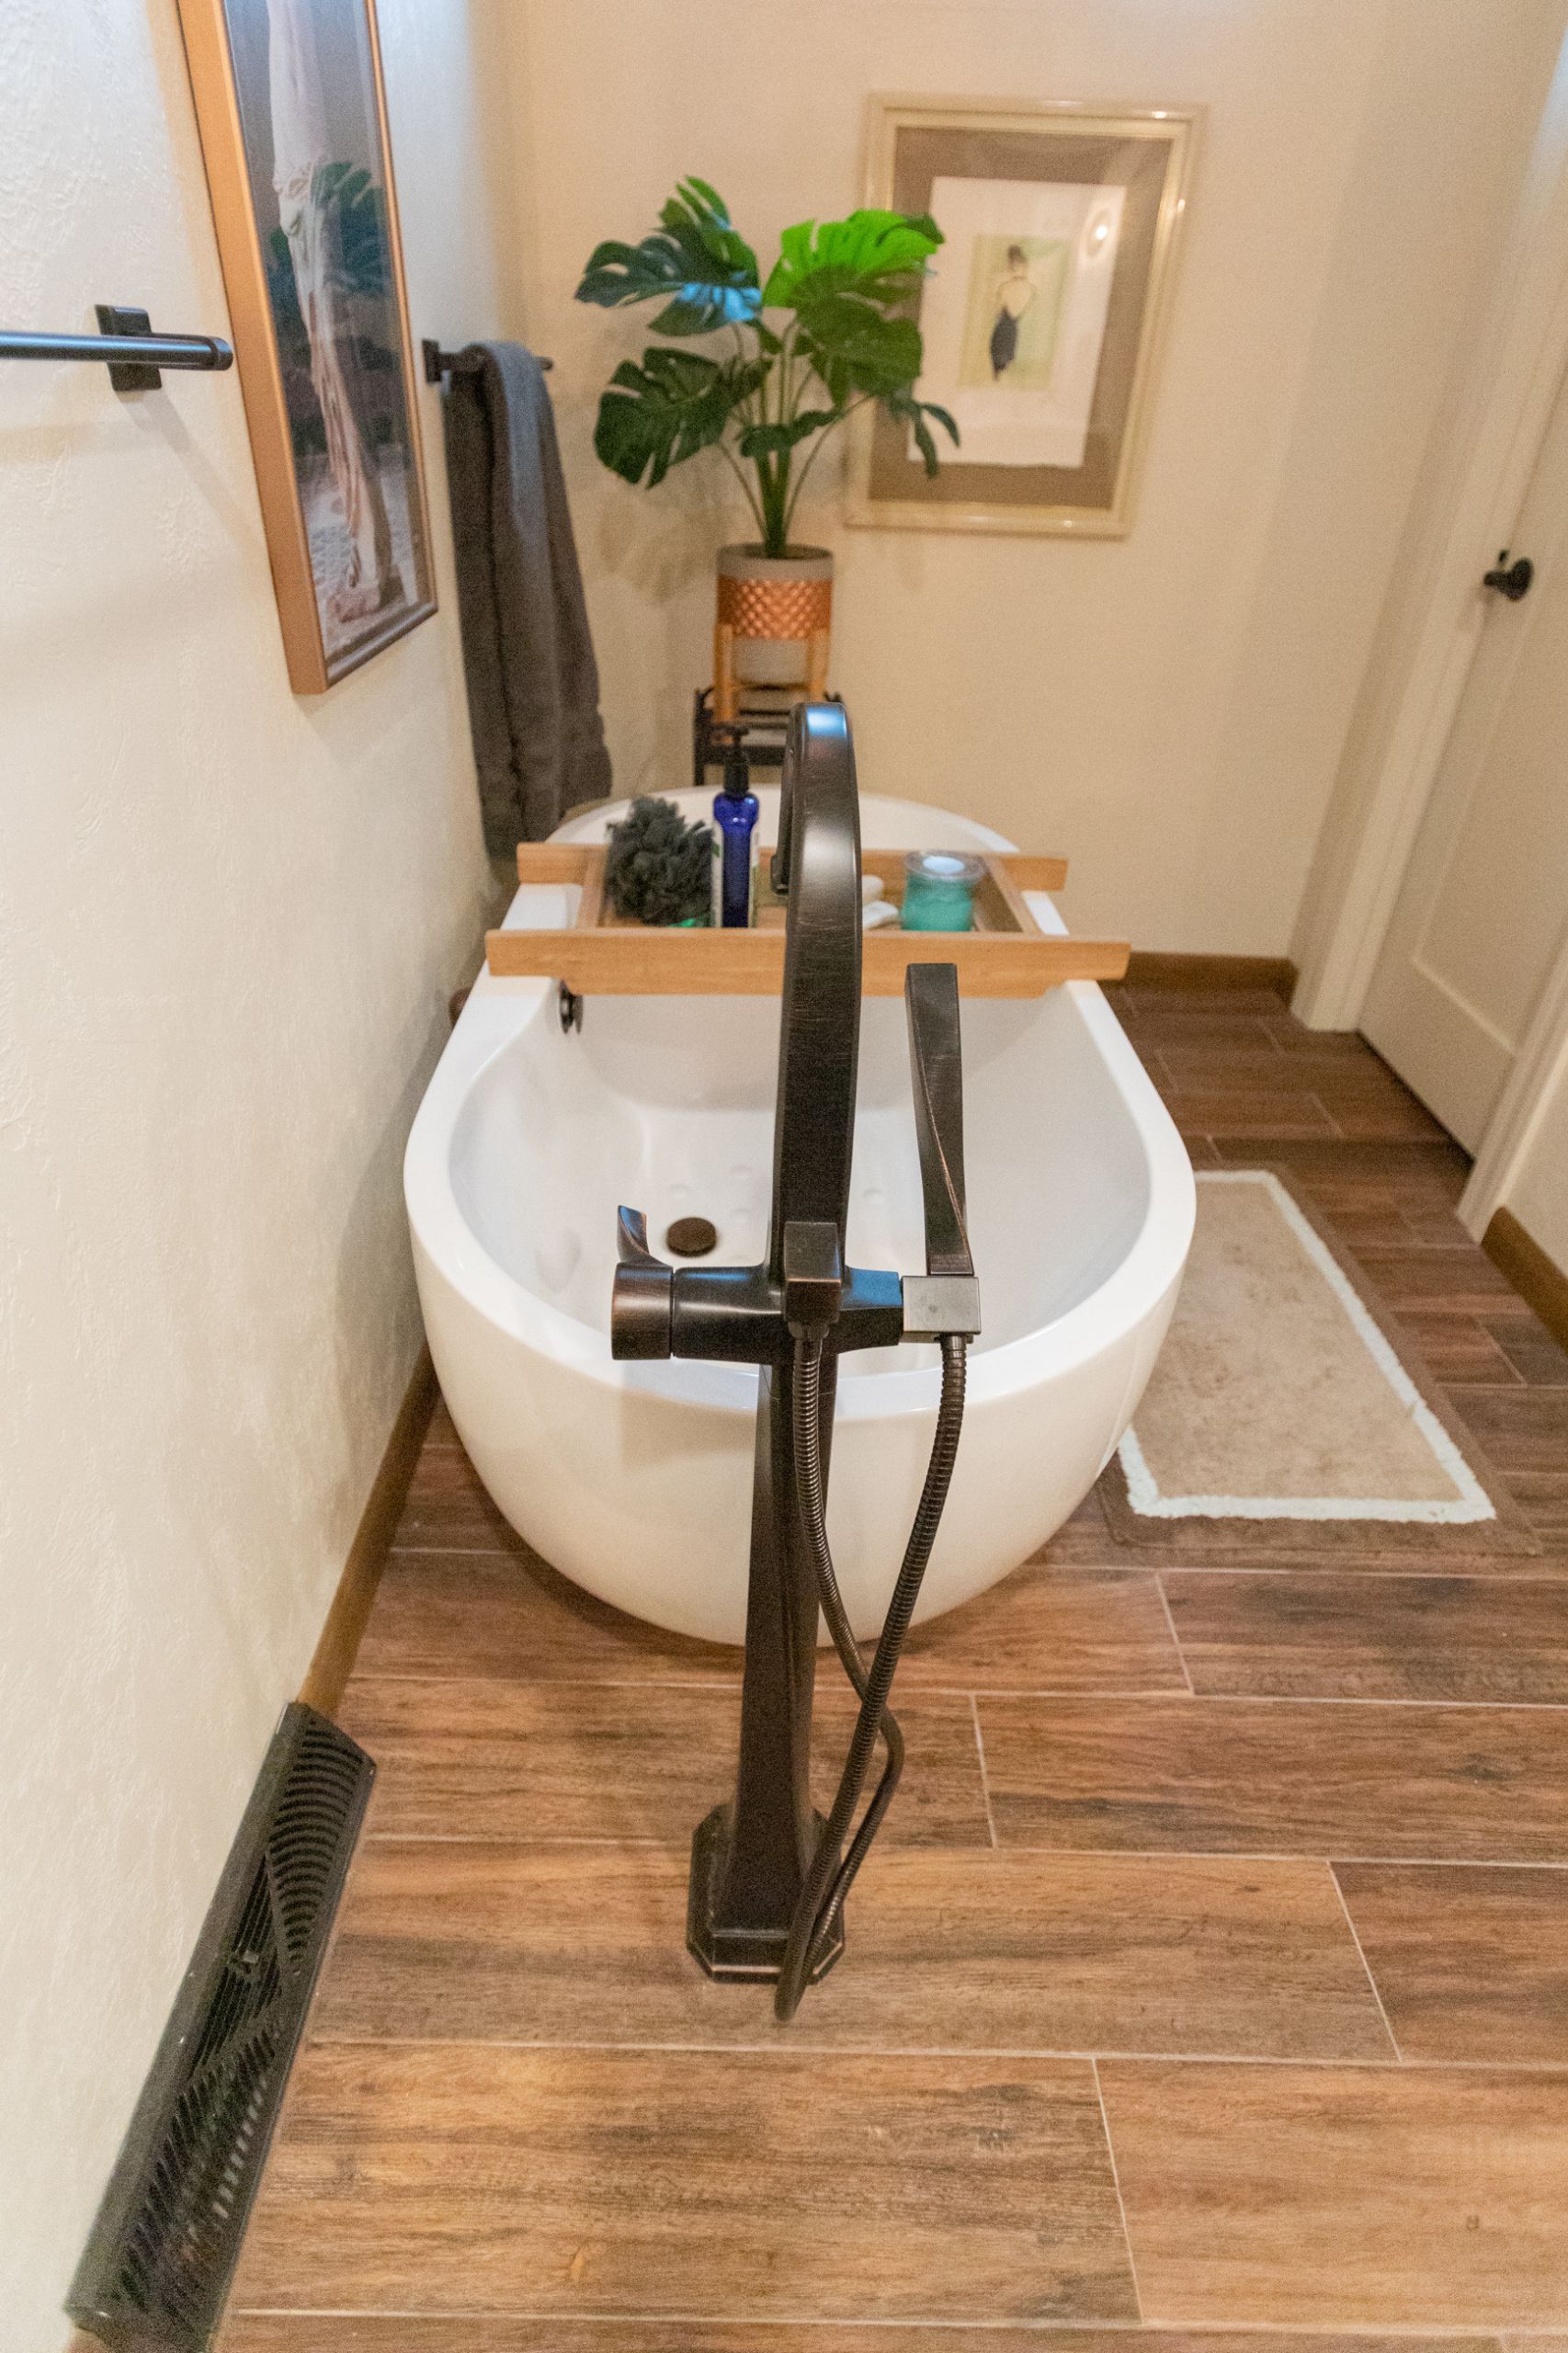 Bathroom Remodeling Wichita Ks
 soaker tub Wichita KS bath remodel Pinnacle Homes Inc